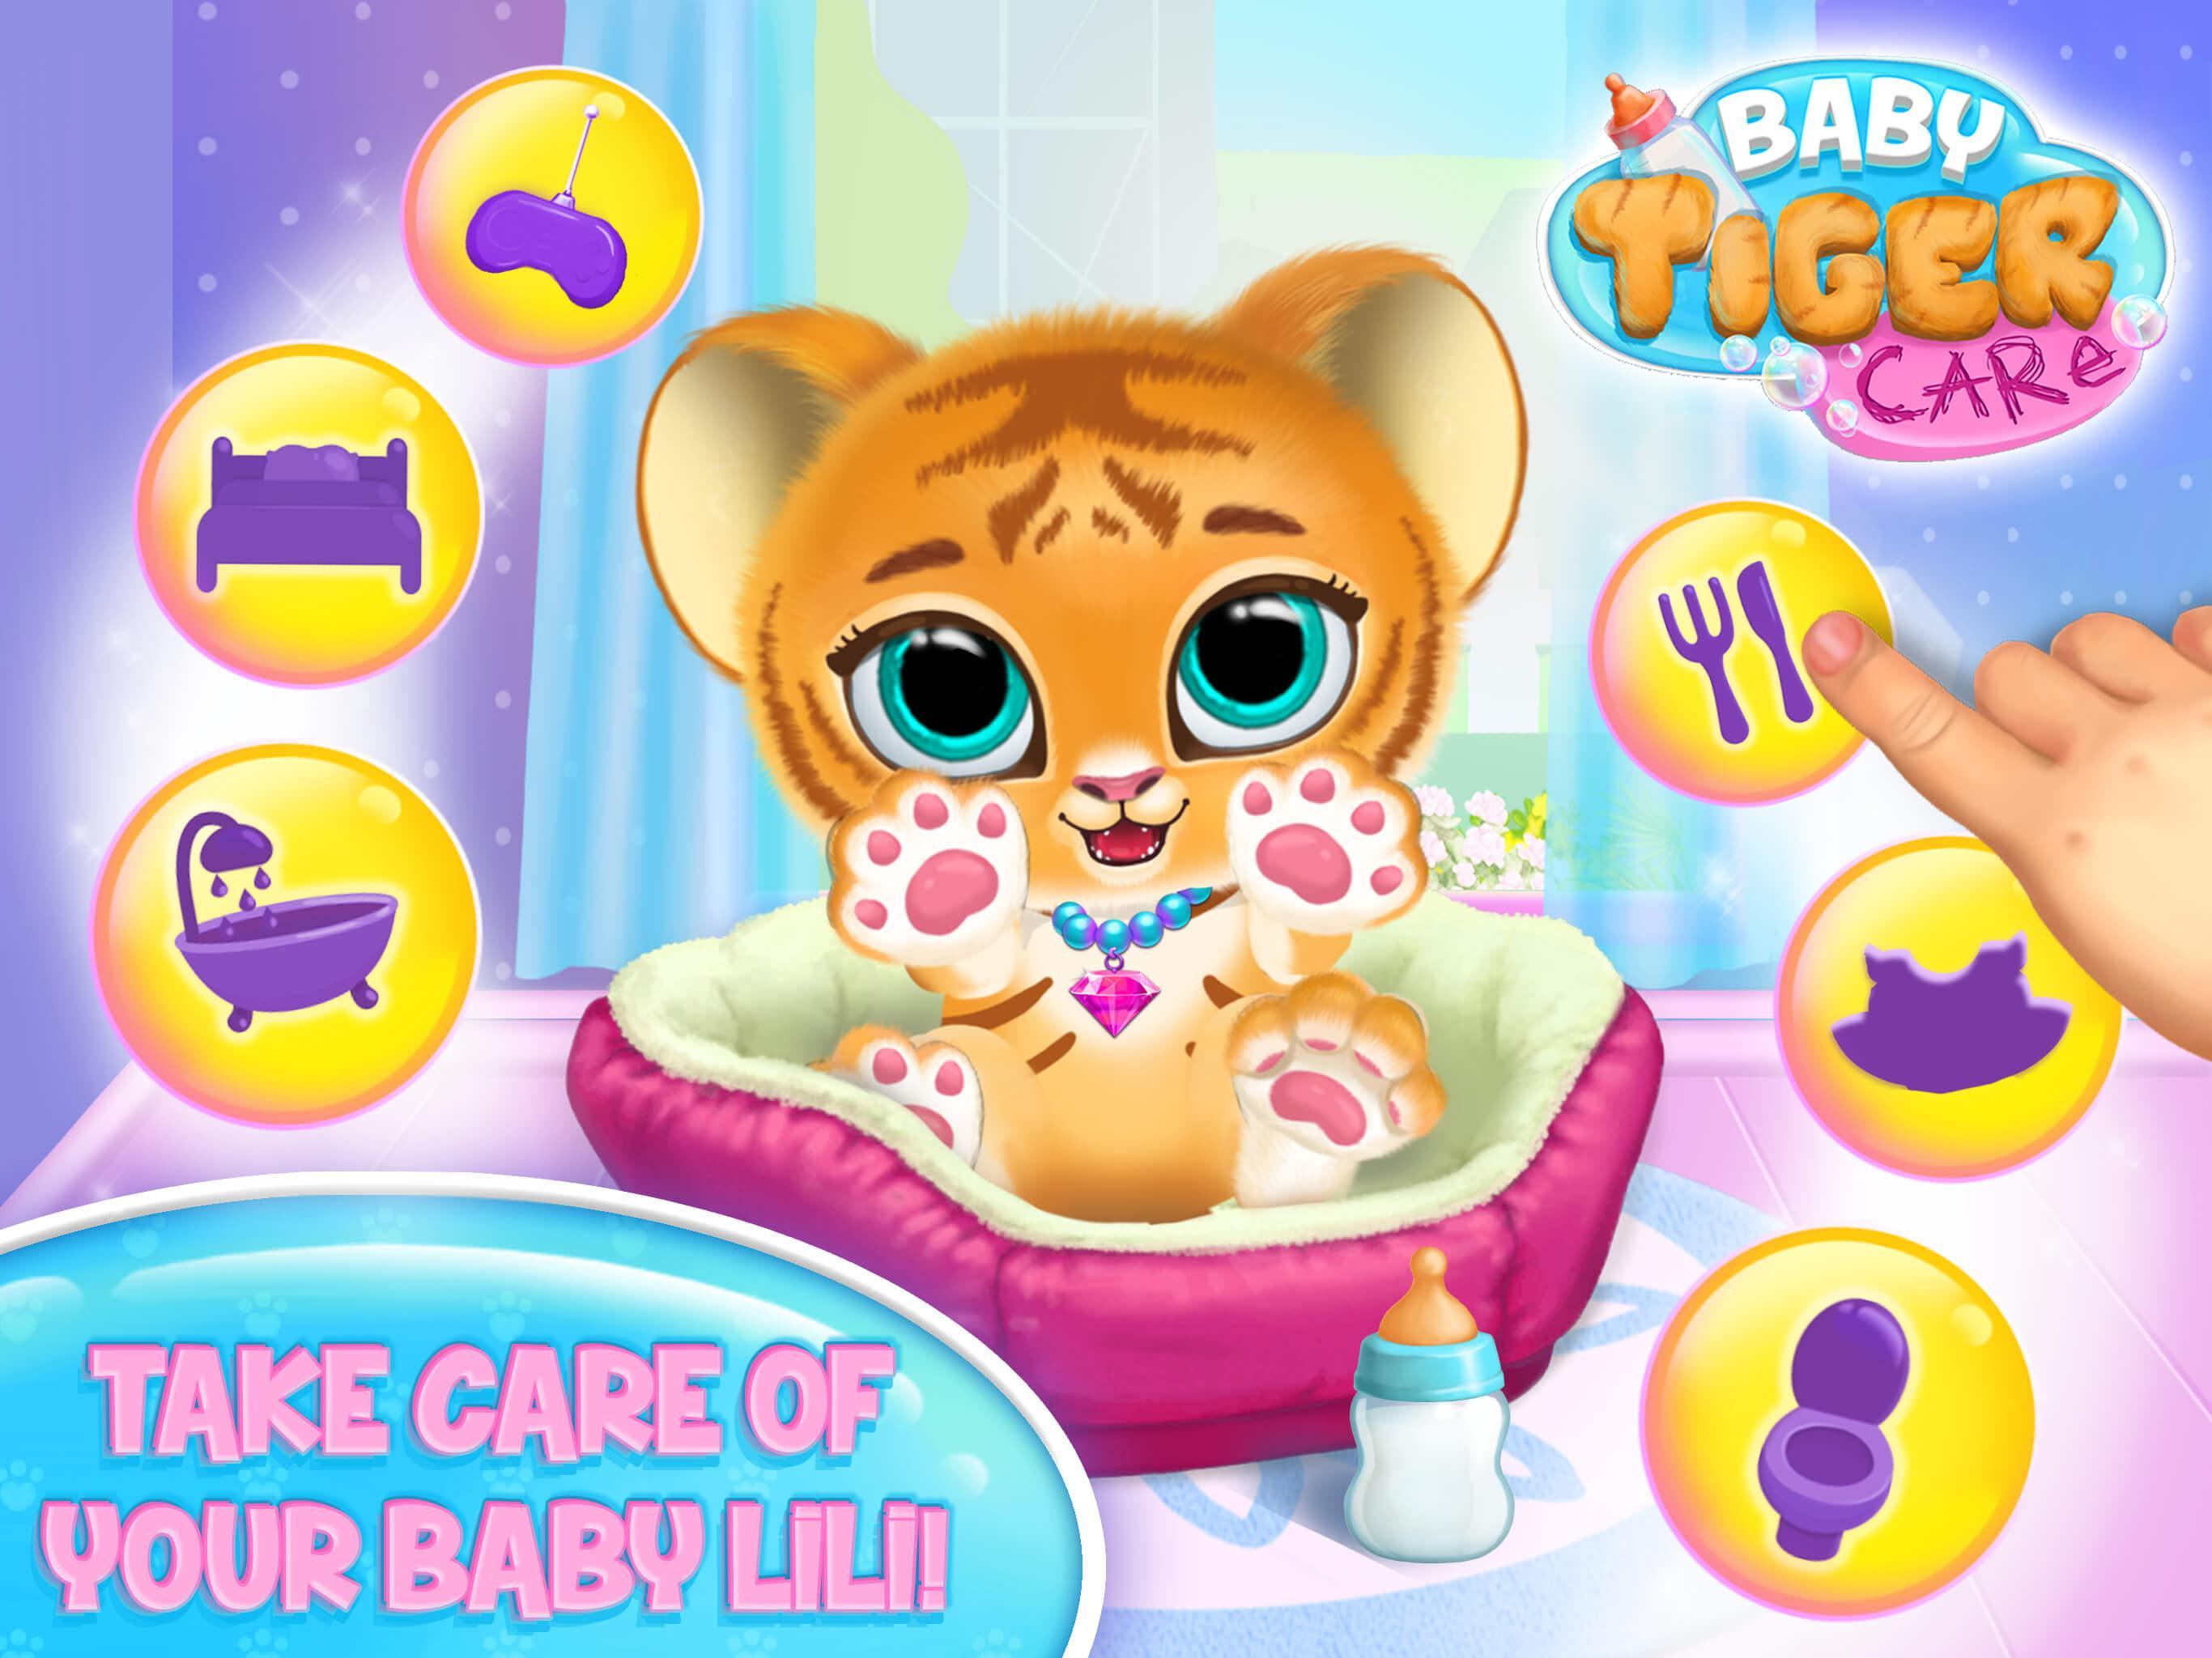 Baby Tiger Care My Cute Virtual Pet Friend 3.0.33 Screenshot 7